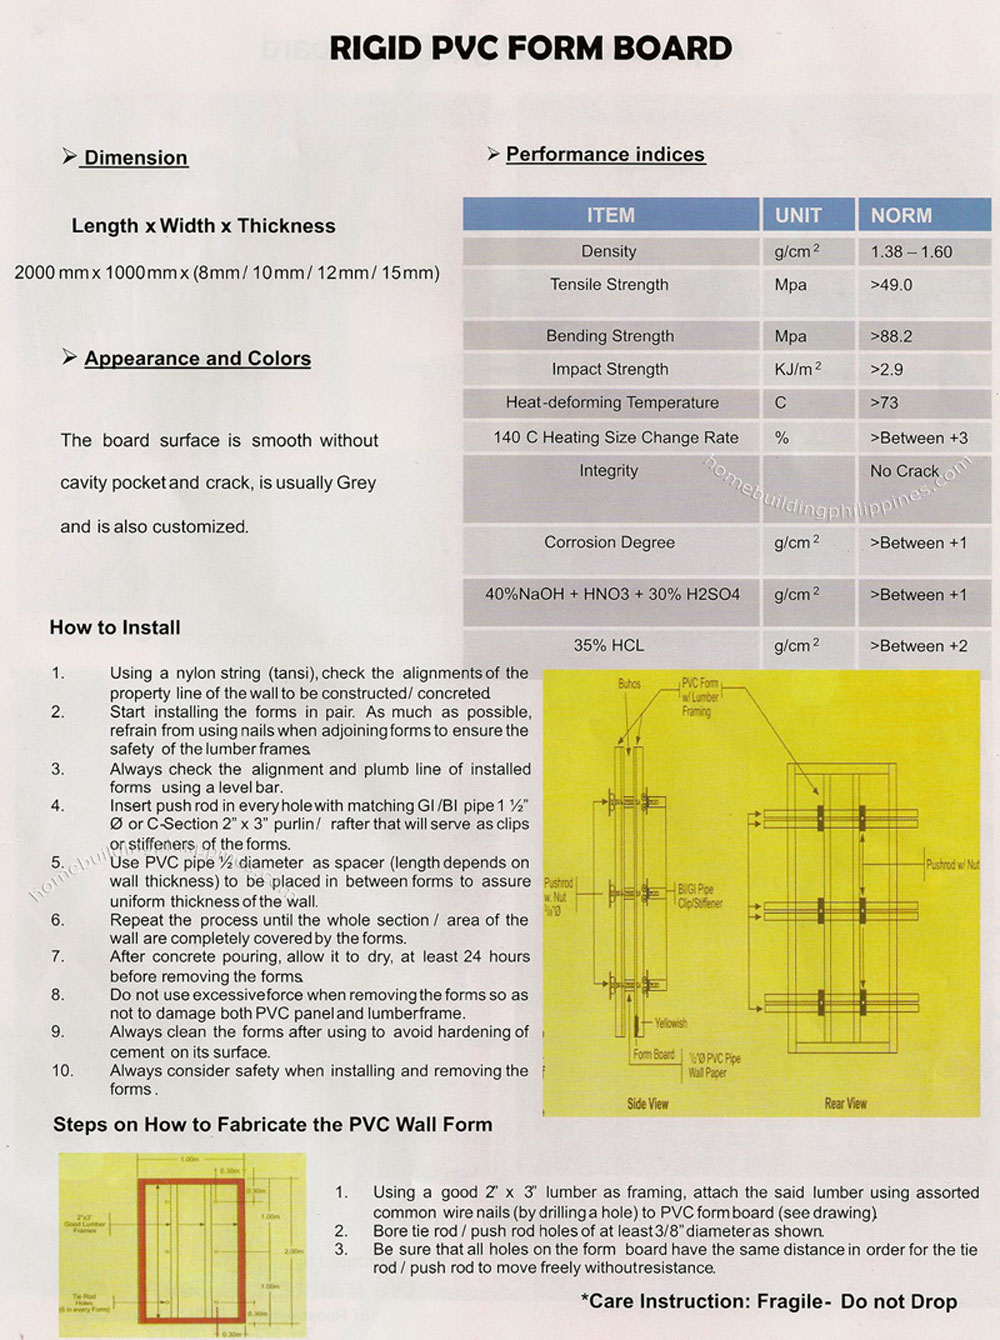 Rigid PVC Form Board Specifications